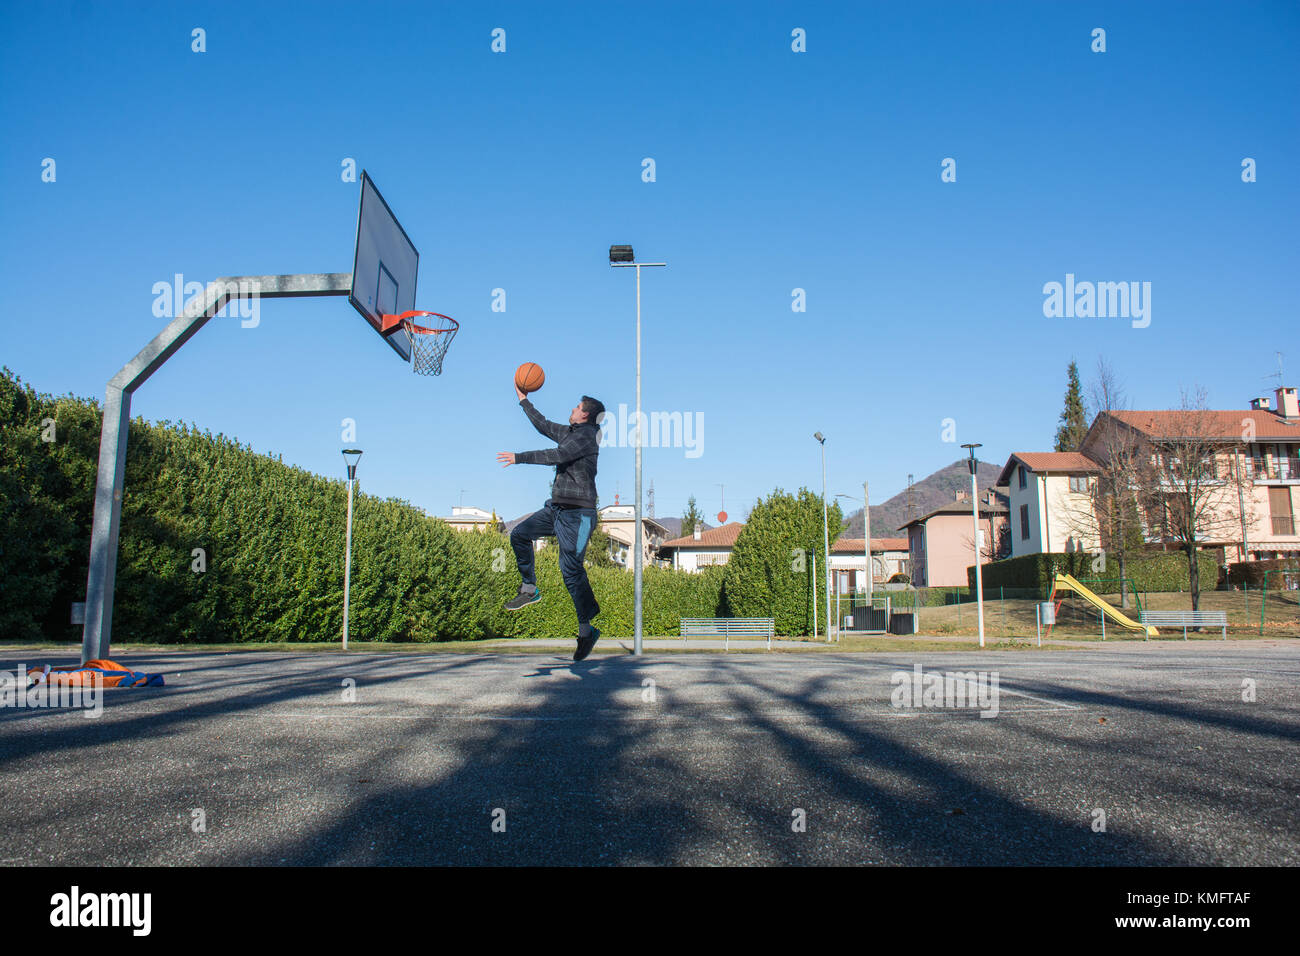 Italian guy playing basketball on playground court Stock Photo